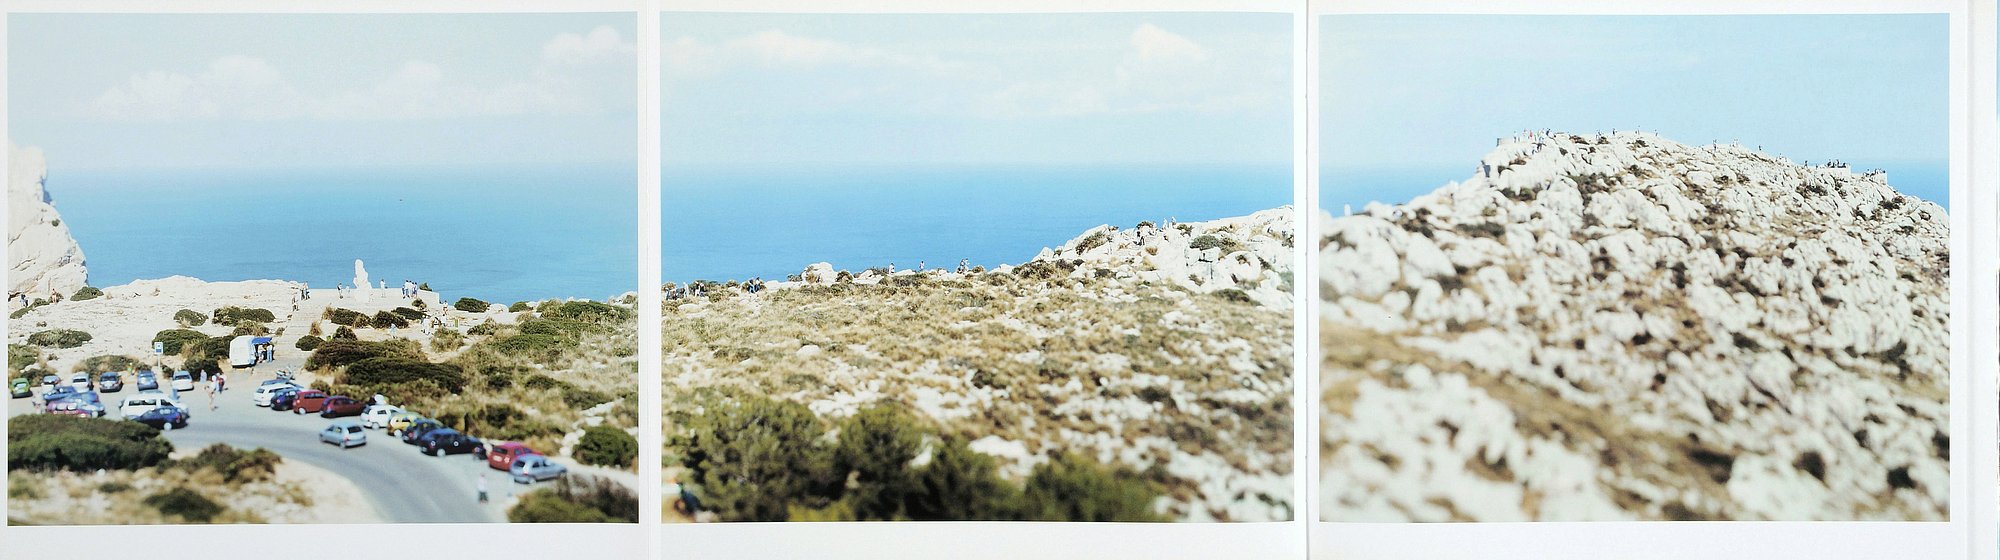 Mallorca - Isle in Progress. Marc Räder. 2007Nazraeli Press LLC. PortlandISBN : 978-1-59005-181-8